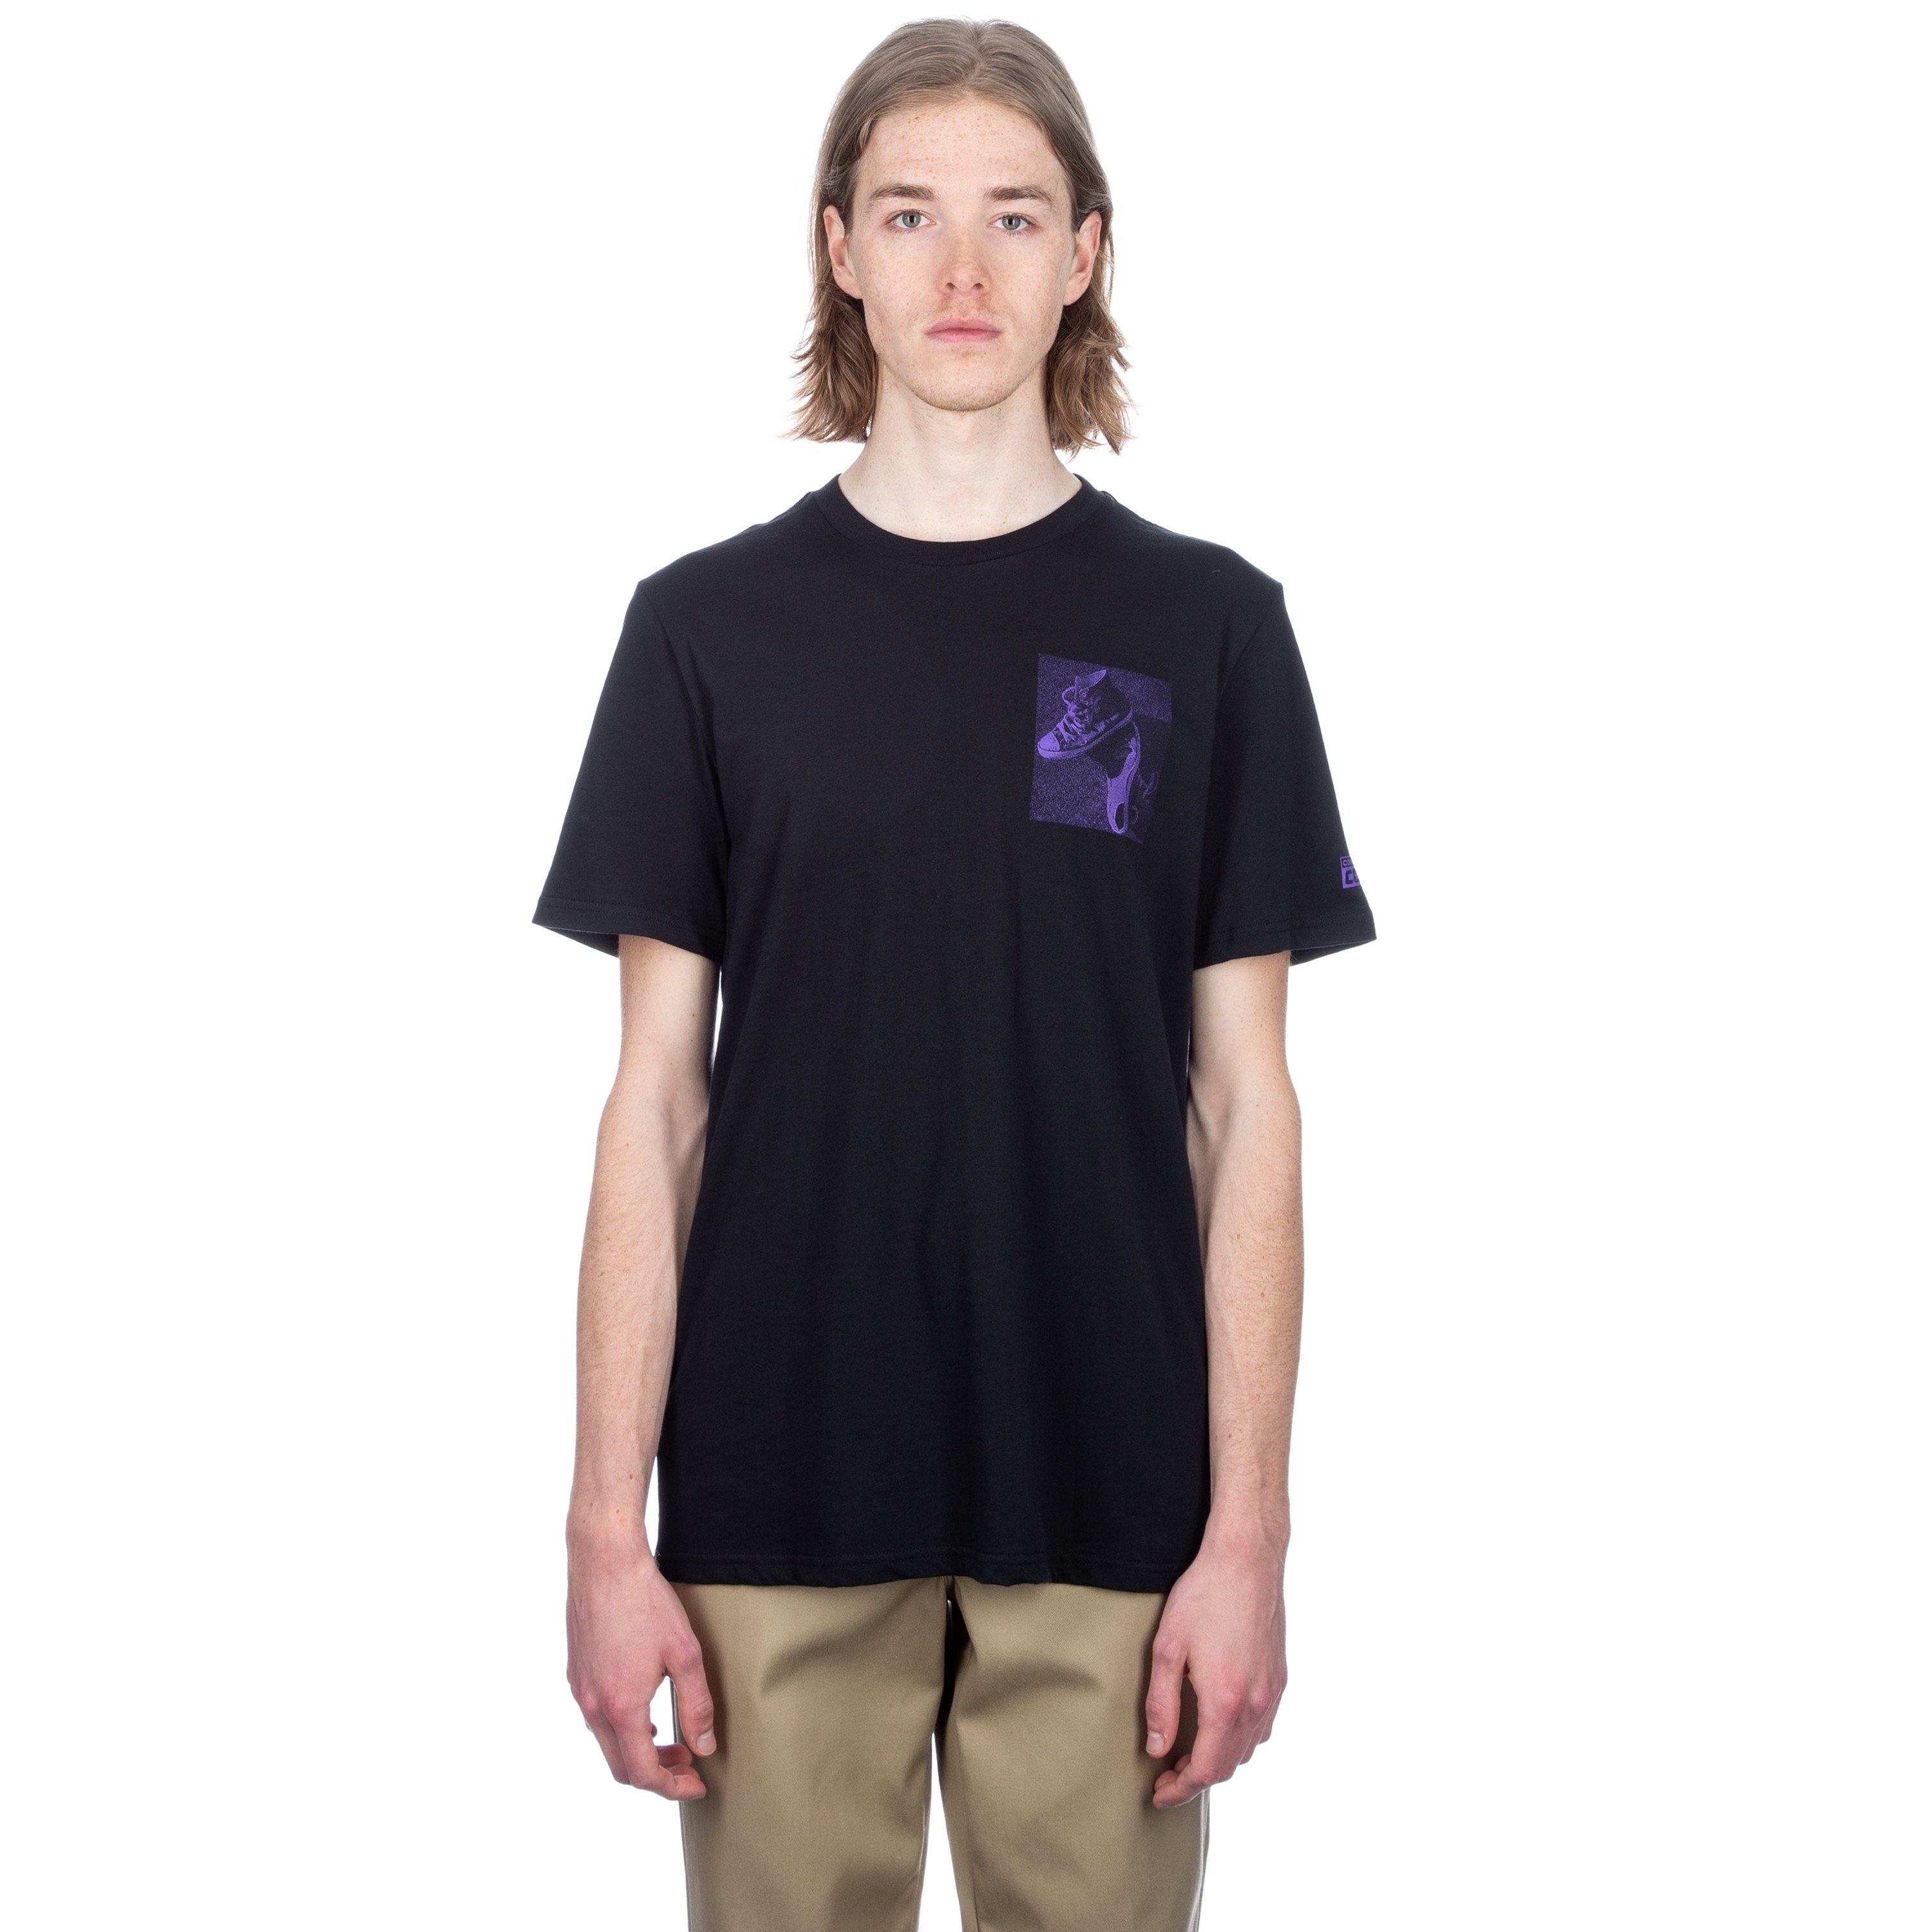 Converse Cons 'Purple' T-Shirt (Black) - Consortium